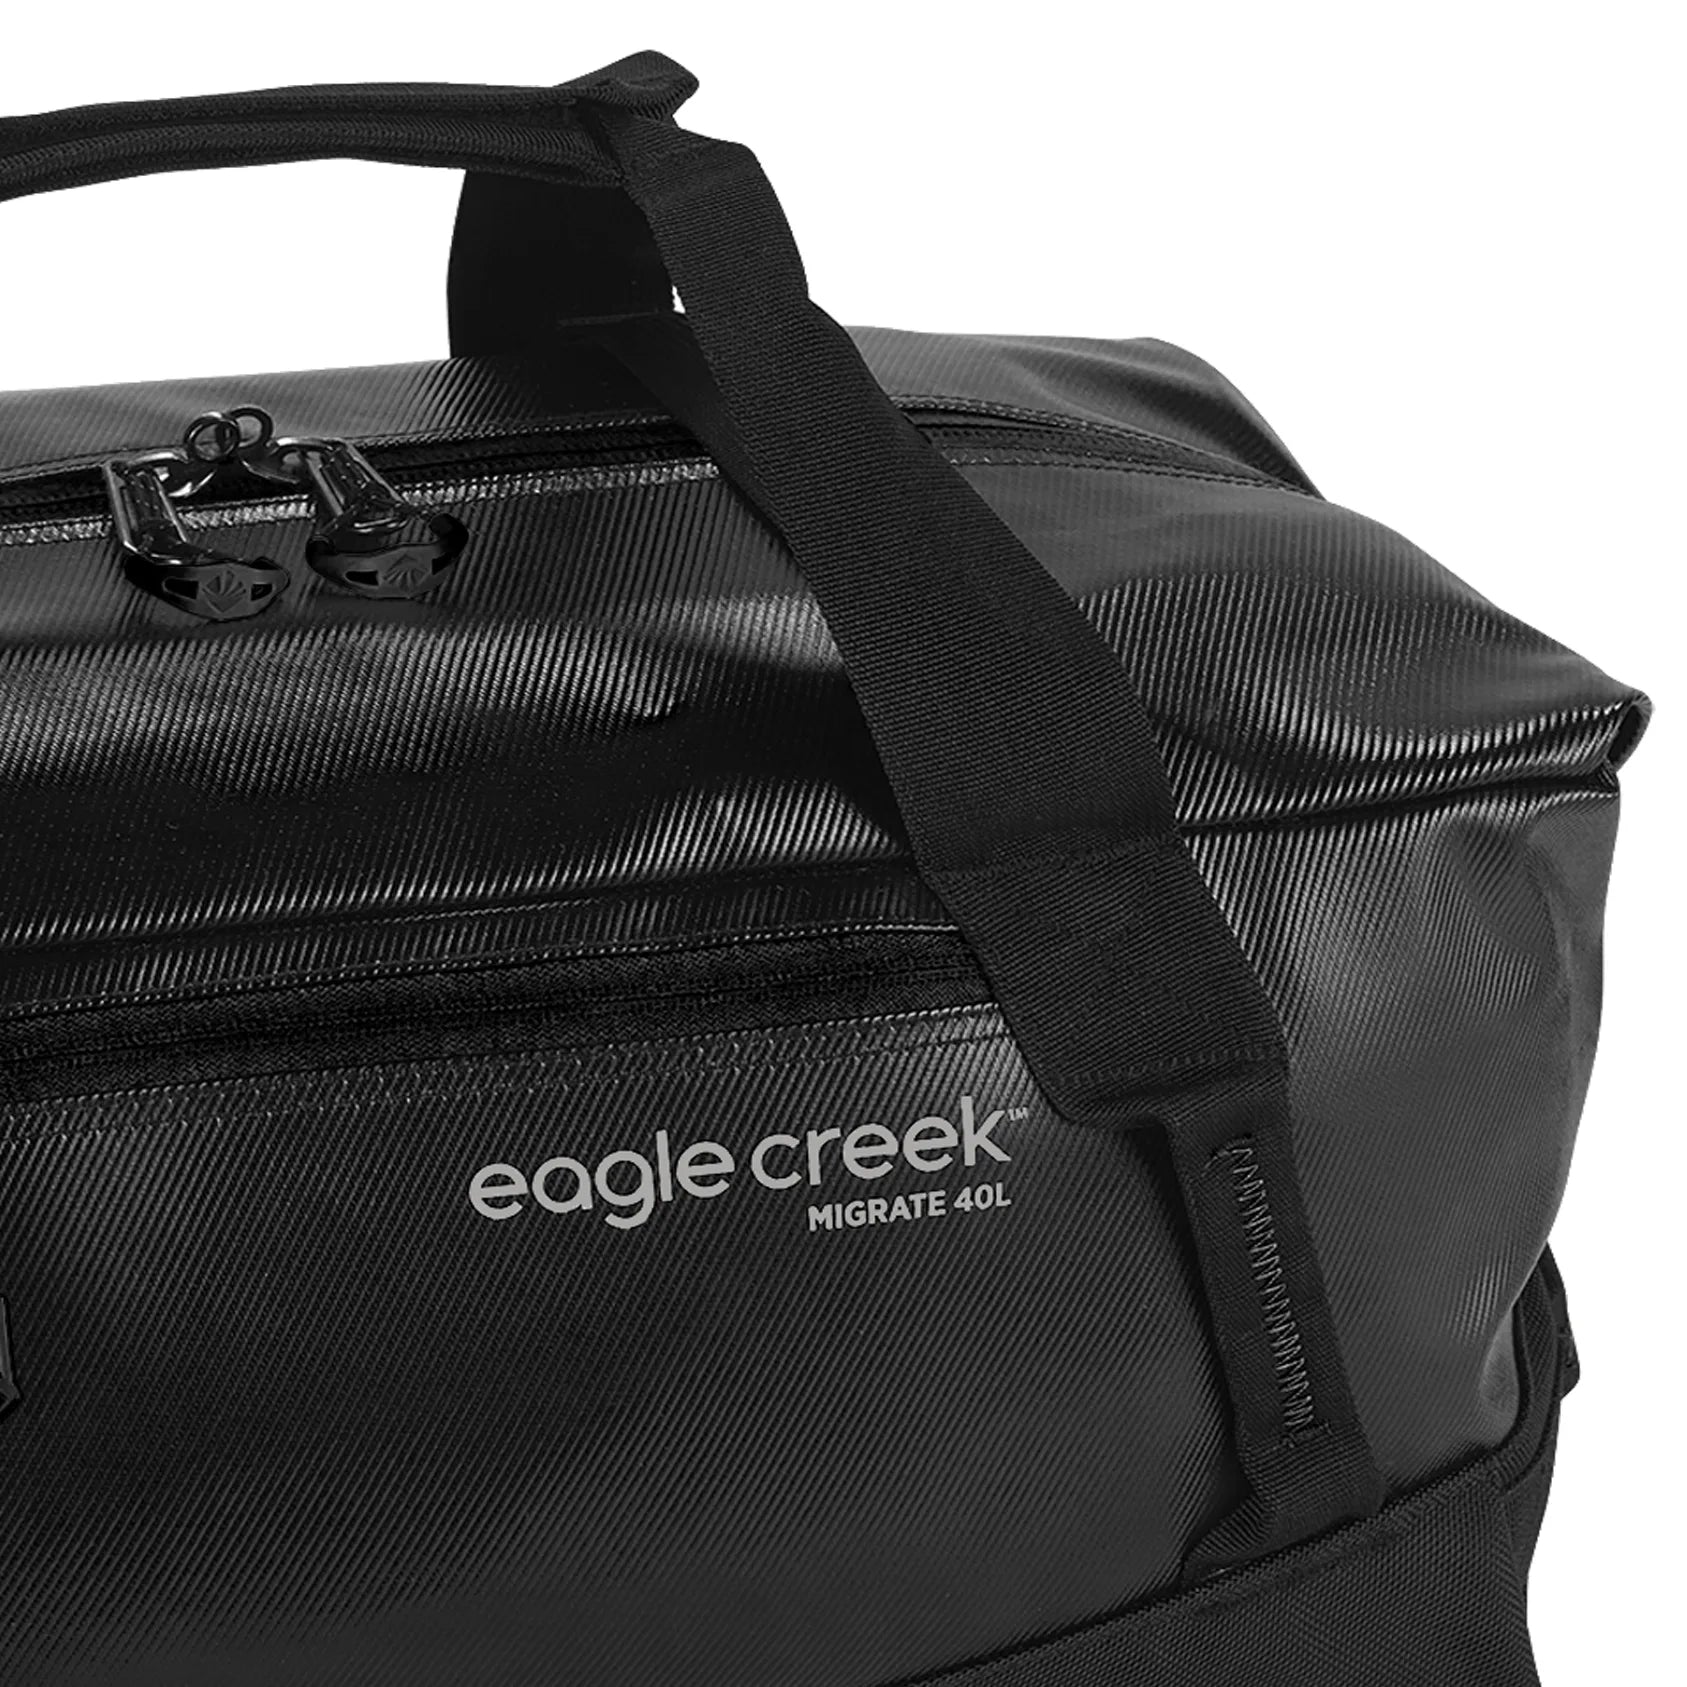 Eagle Creek Migrate sac de voyage 47 cm - noir